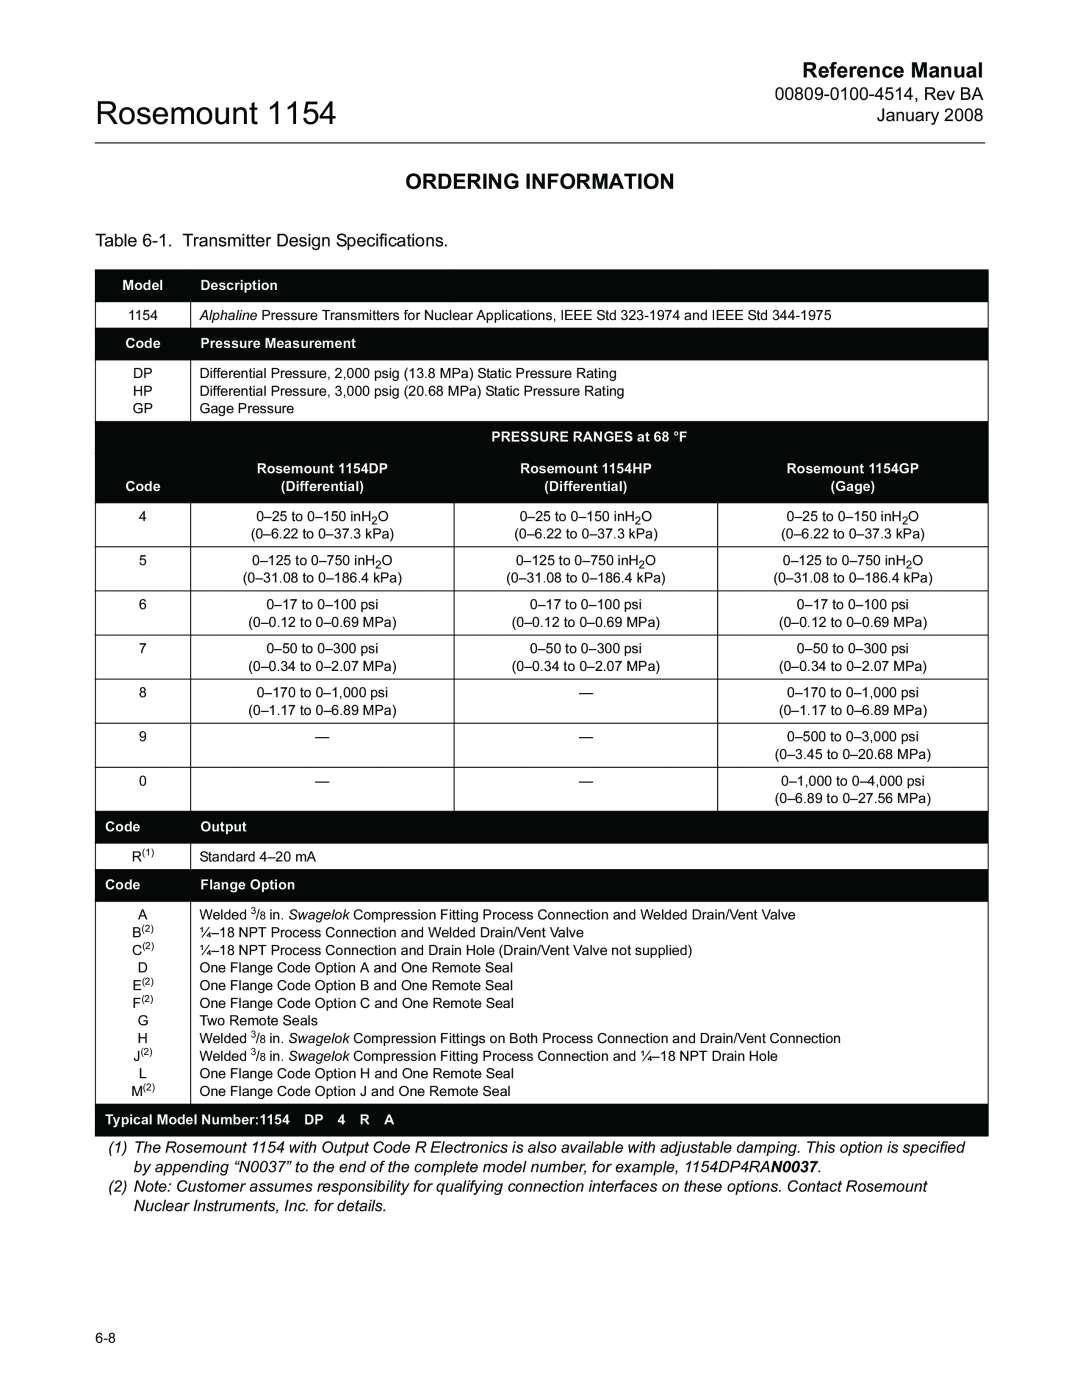 Emerson 00809-0100-4514, 1154 manual Ordering Information, Rosemount, Reference Manual, Gage 